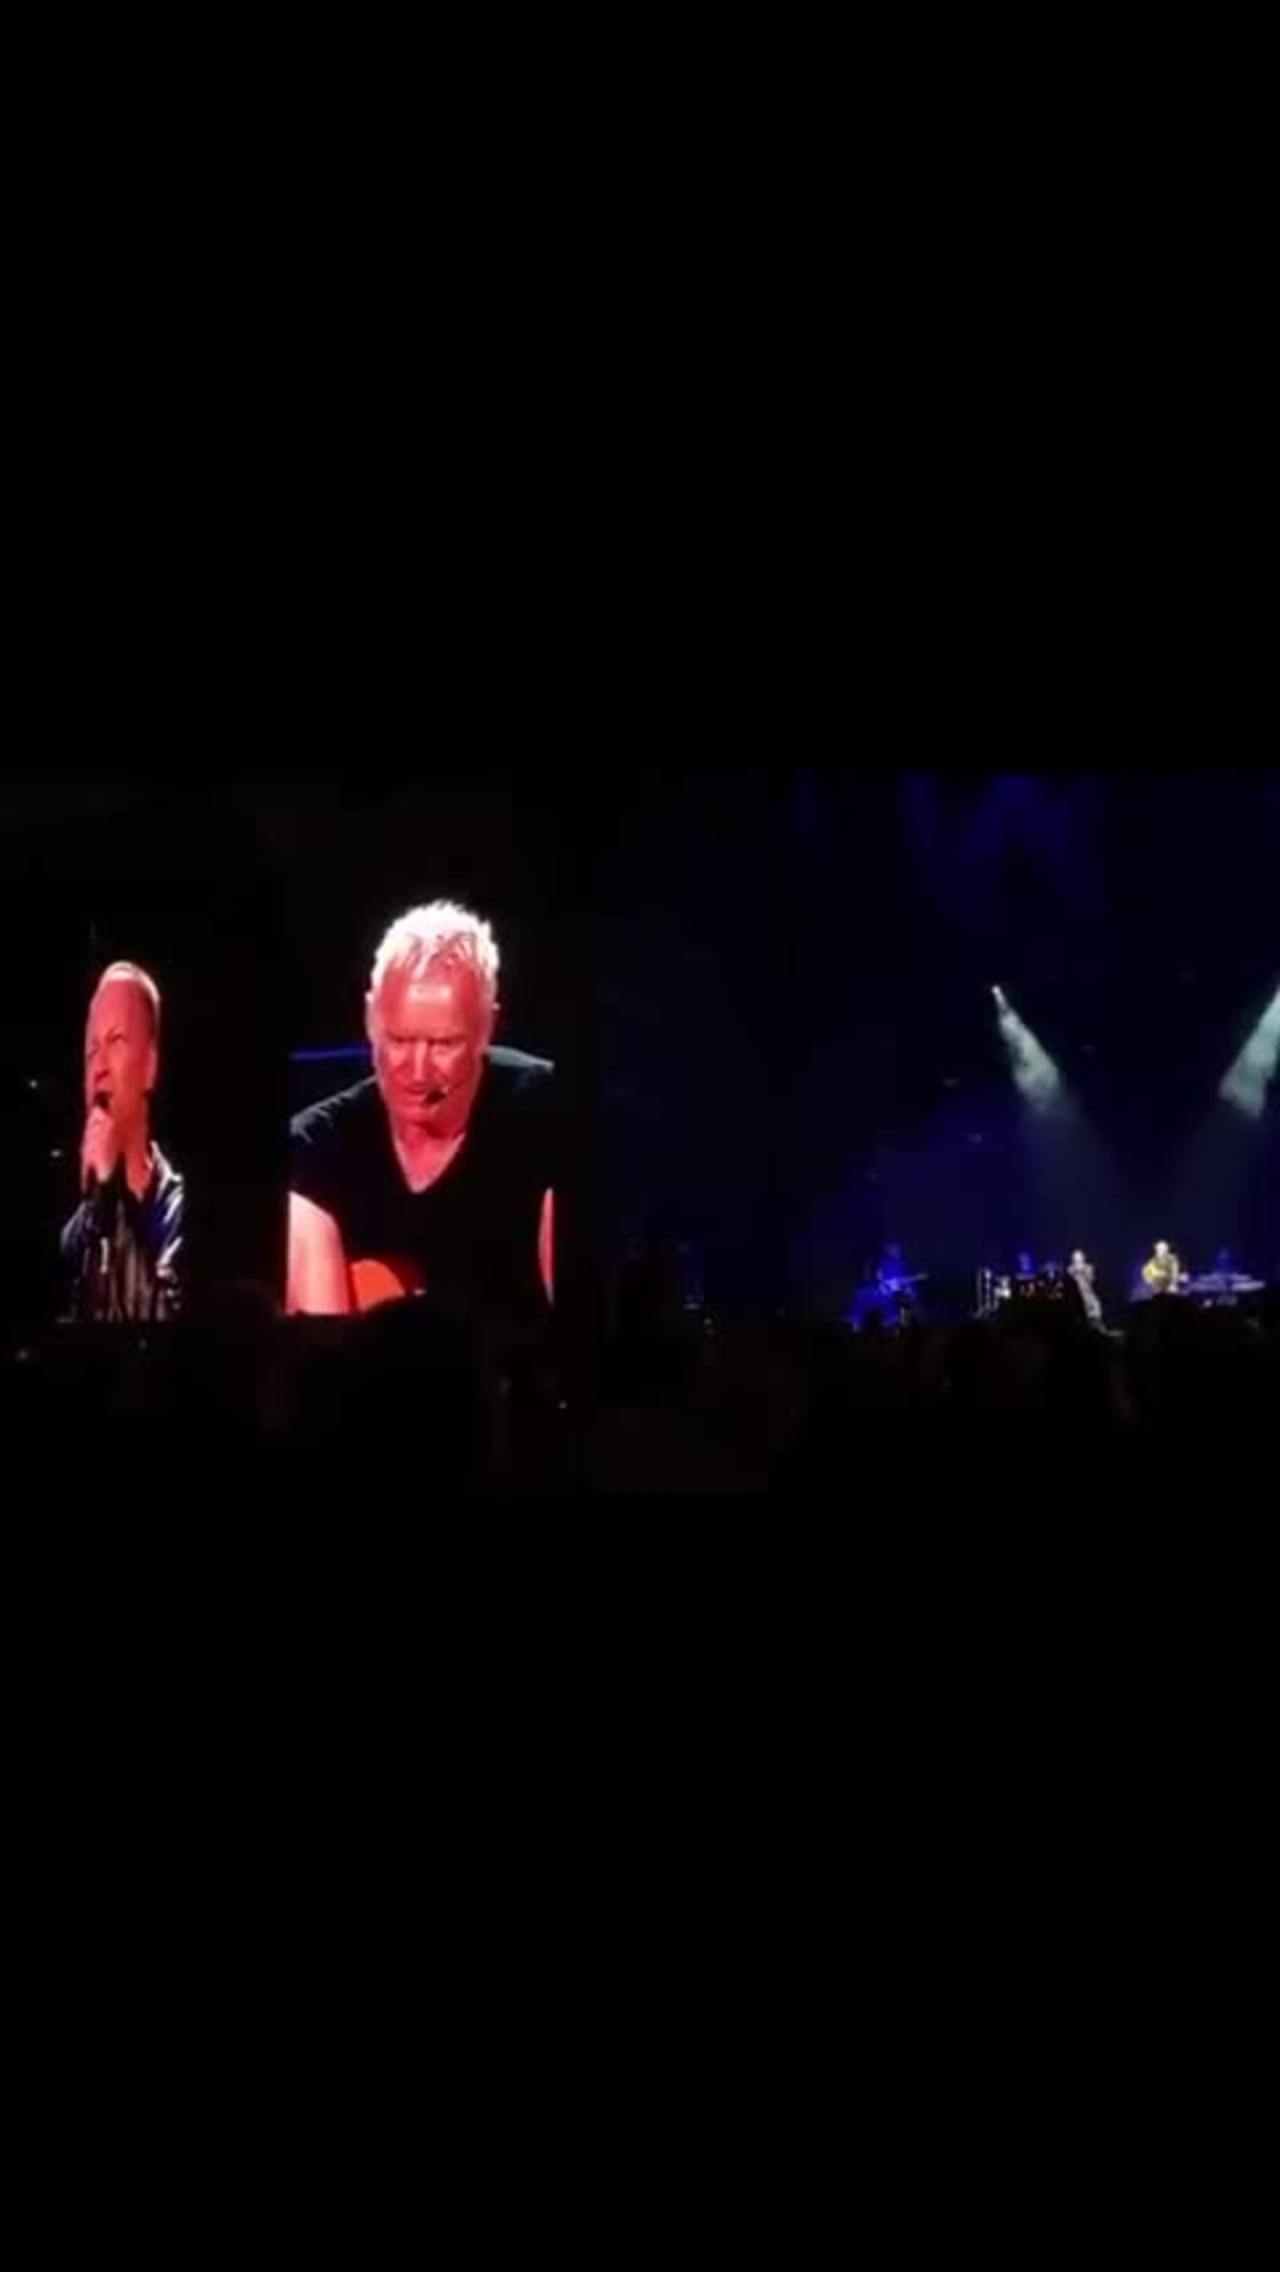 Sting at concert in poland - Ukraine war is based upon a lie